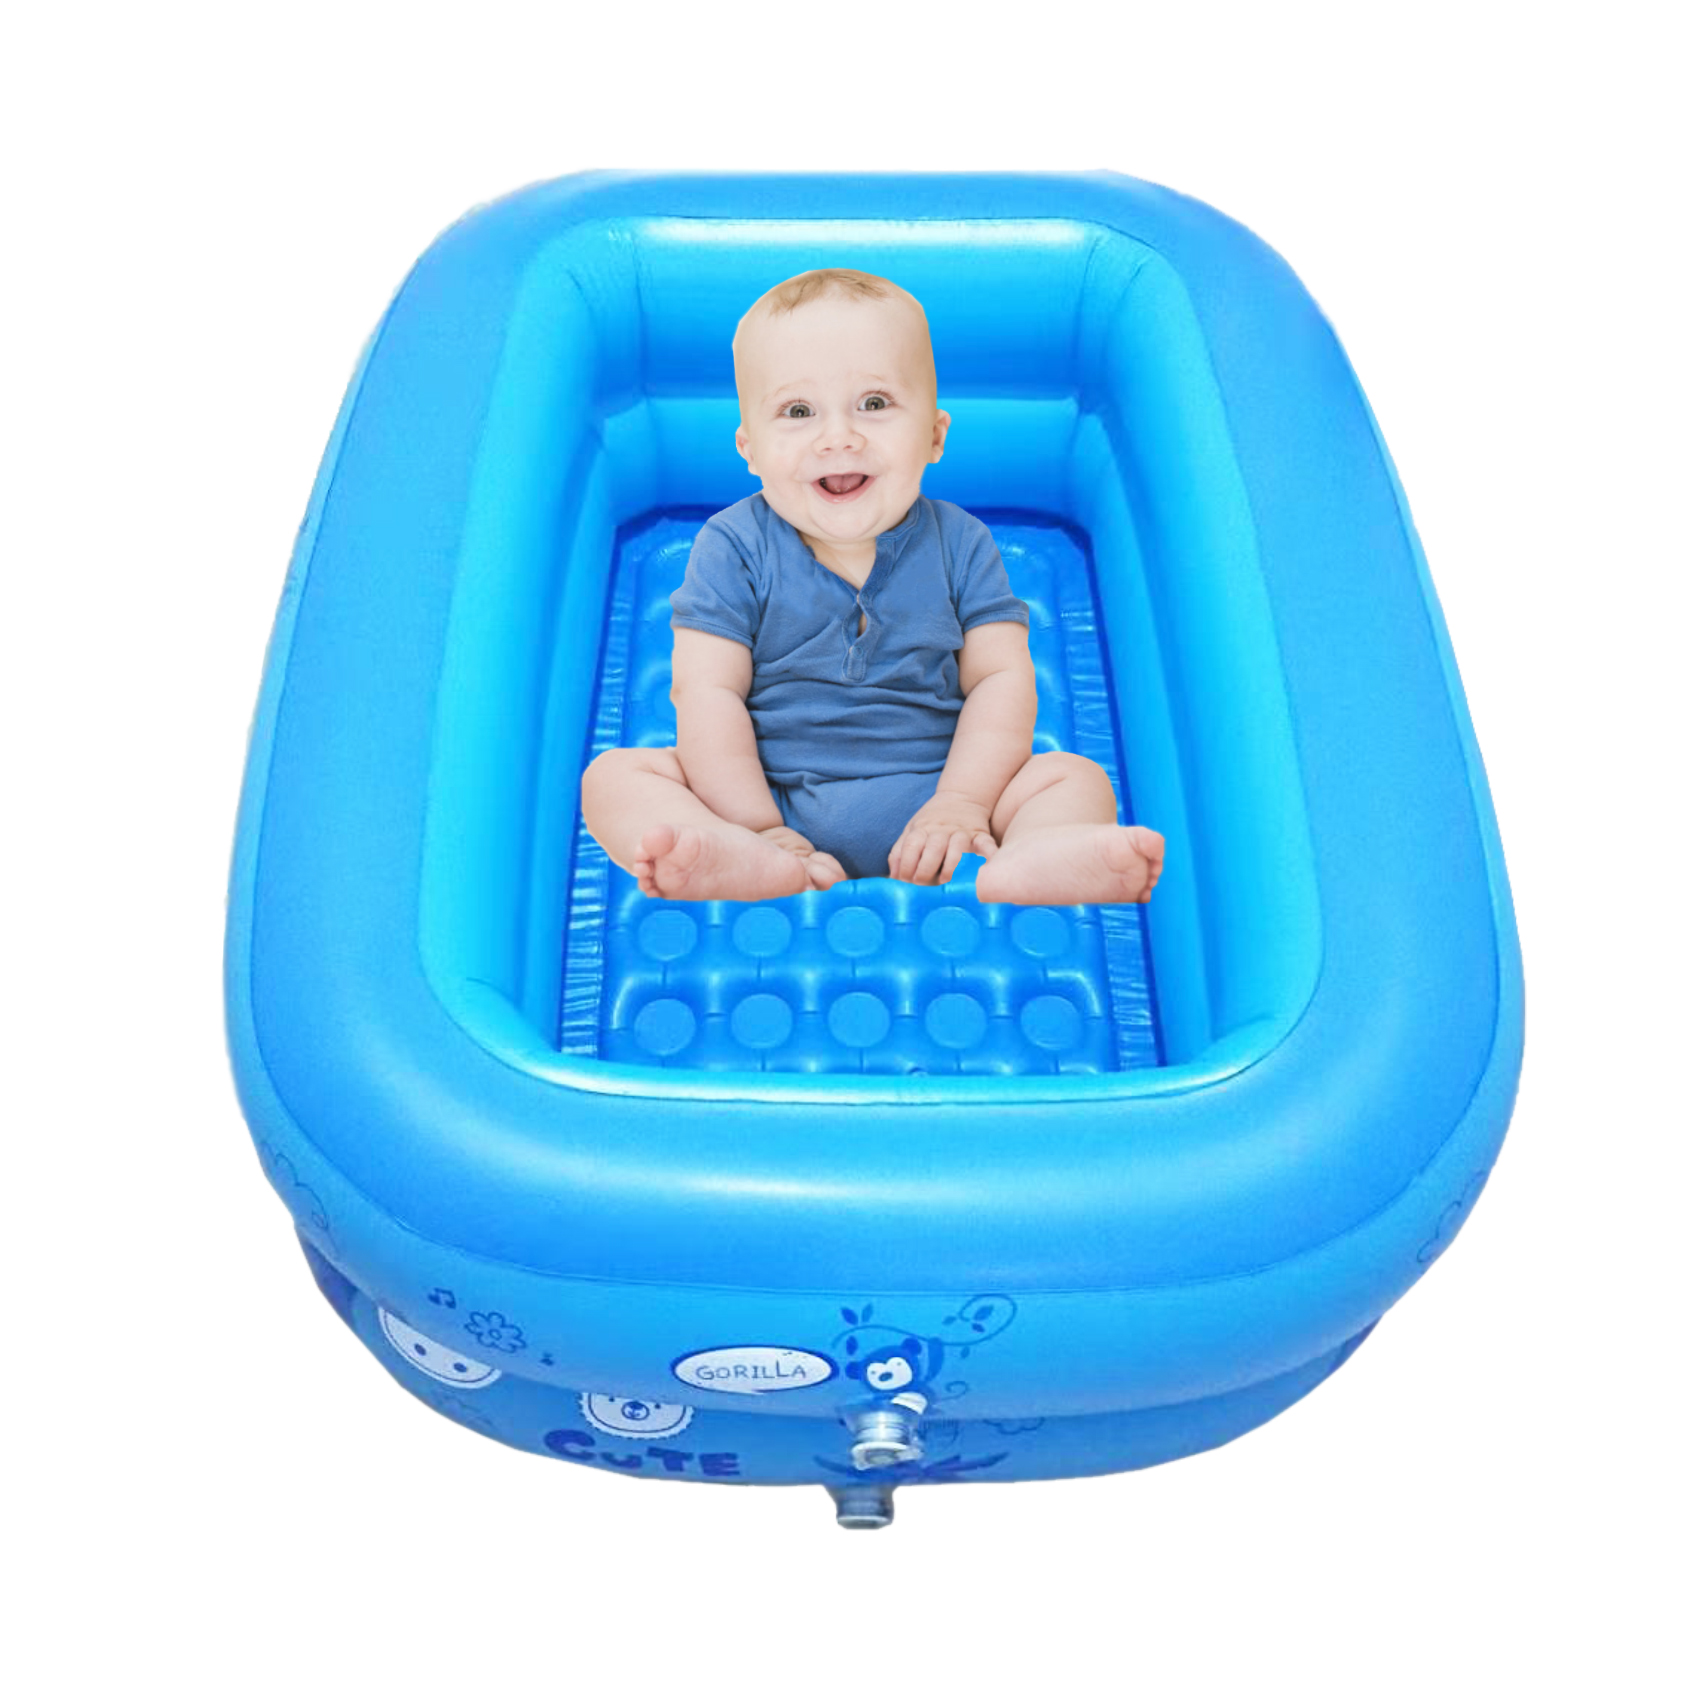 BabySPA Home Spa Inflatable Pool (130 x 85 x 46cm)